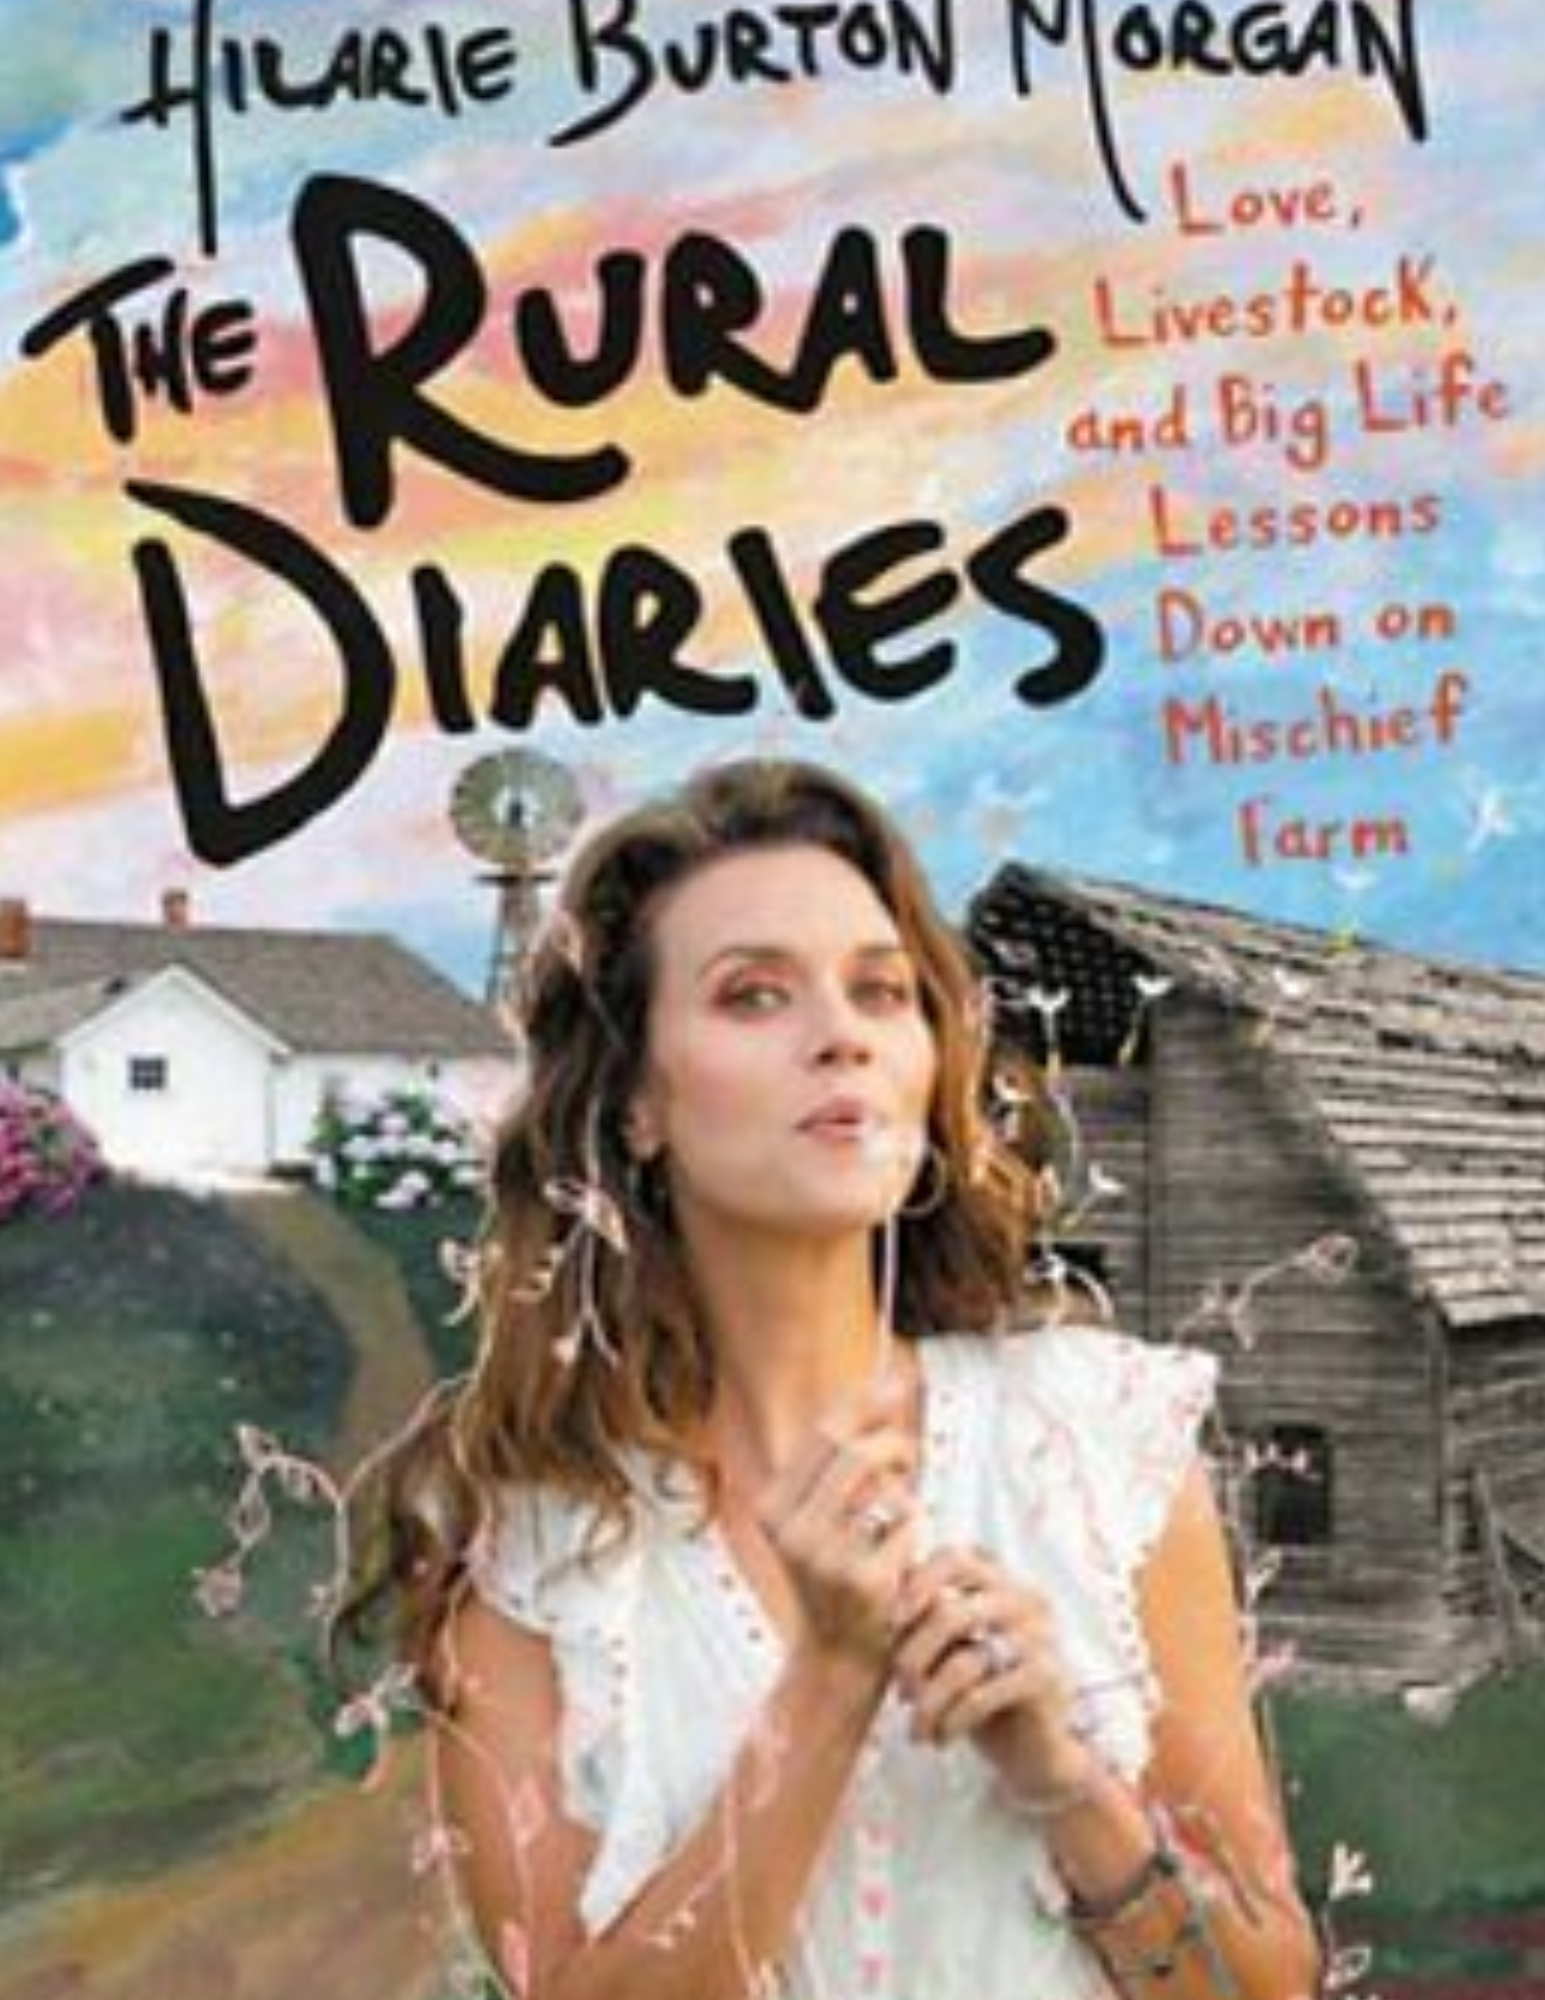 the rural diaries